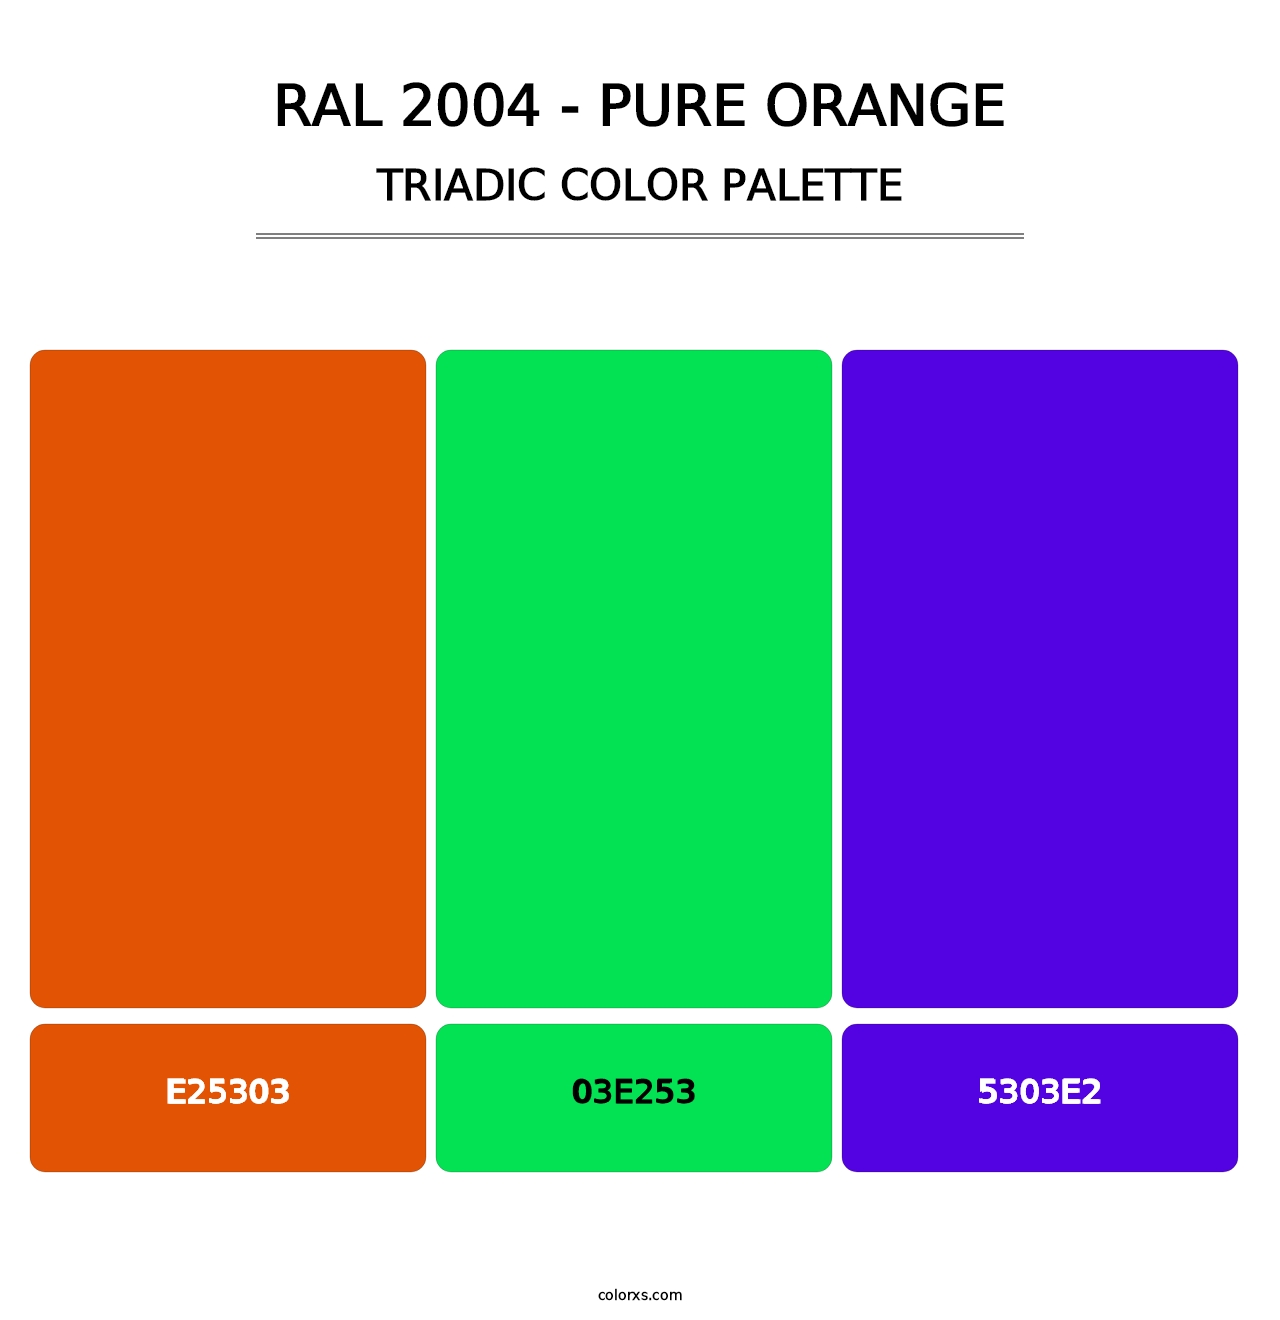 RAL 2004 - Pure Orange - Triadic Color Palette